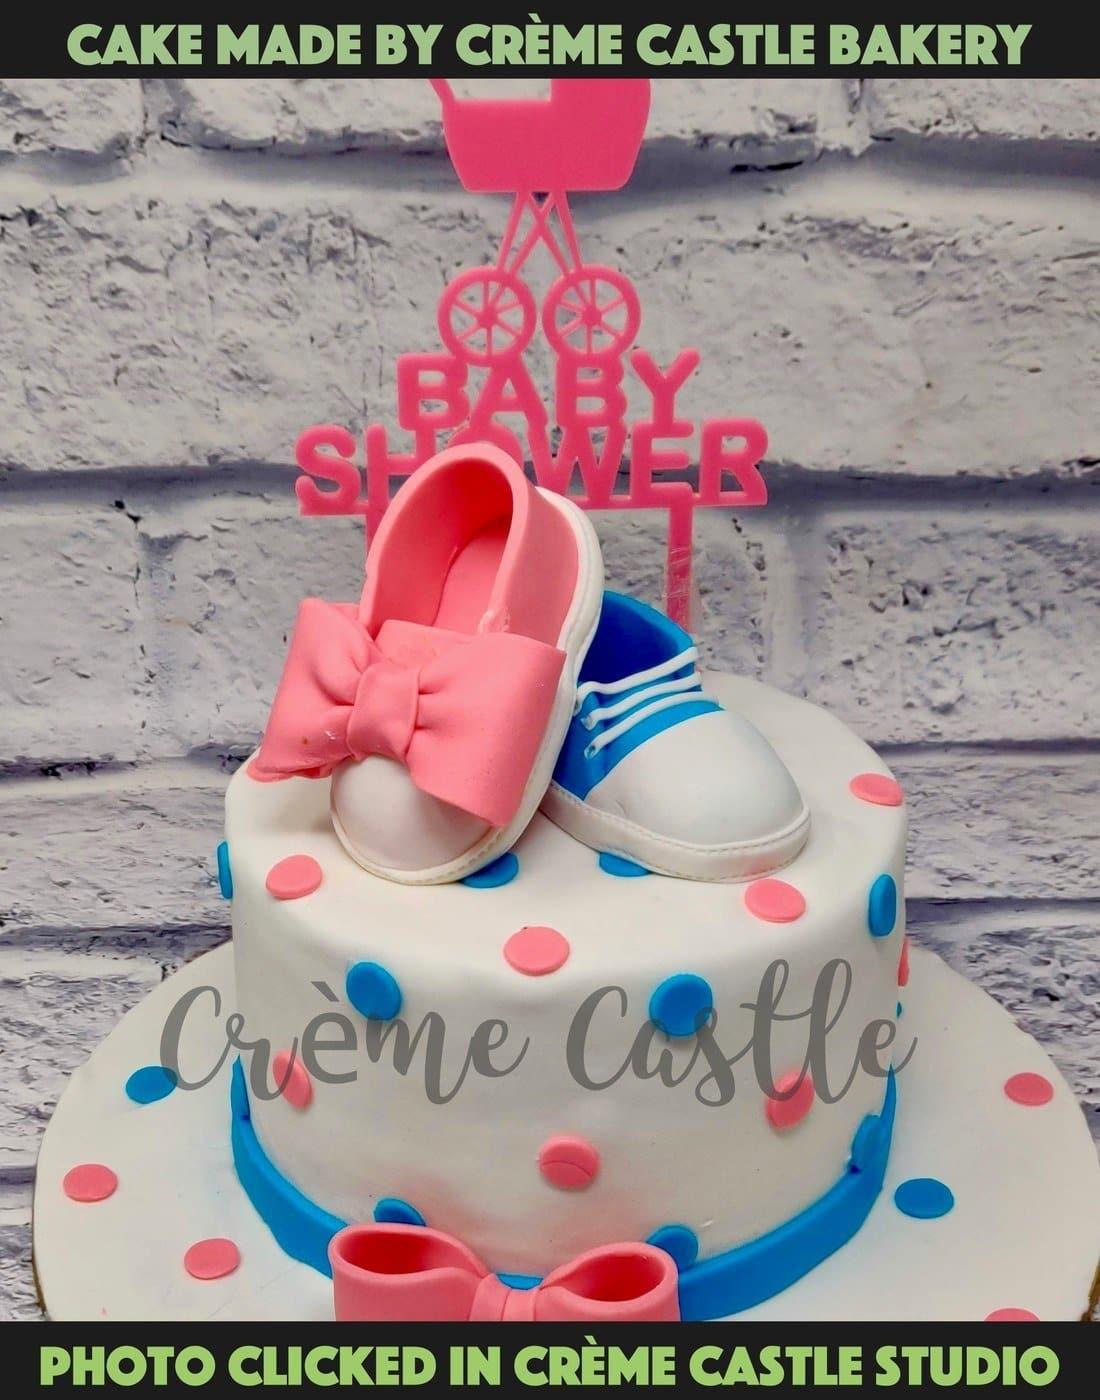 Baby Shower Cake Online for Boys and Girls | DoorstepCakes